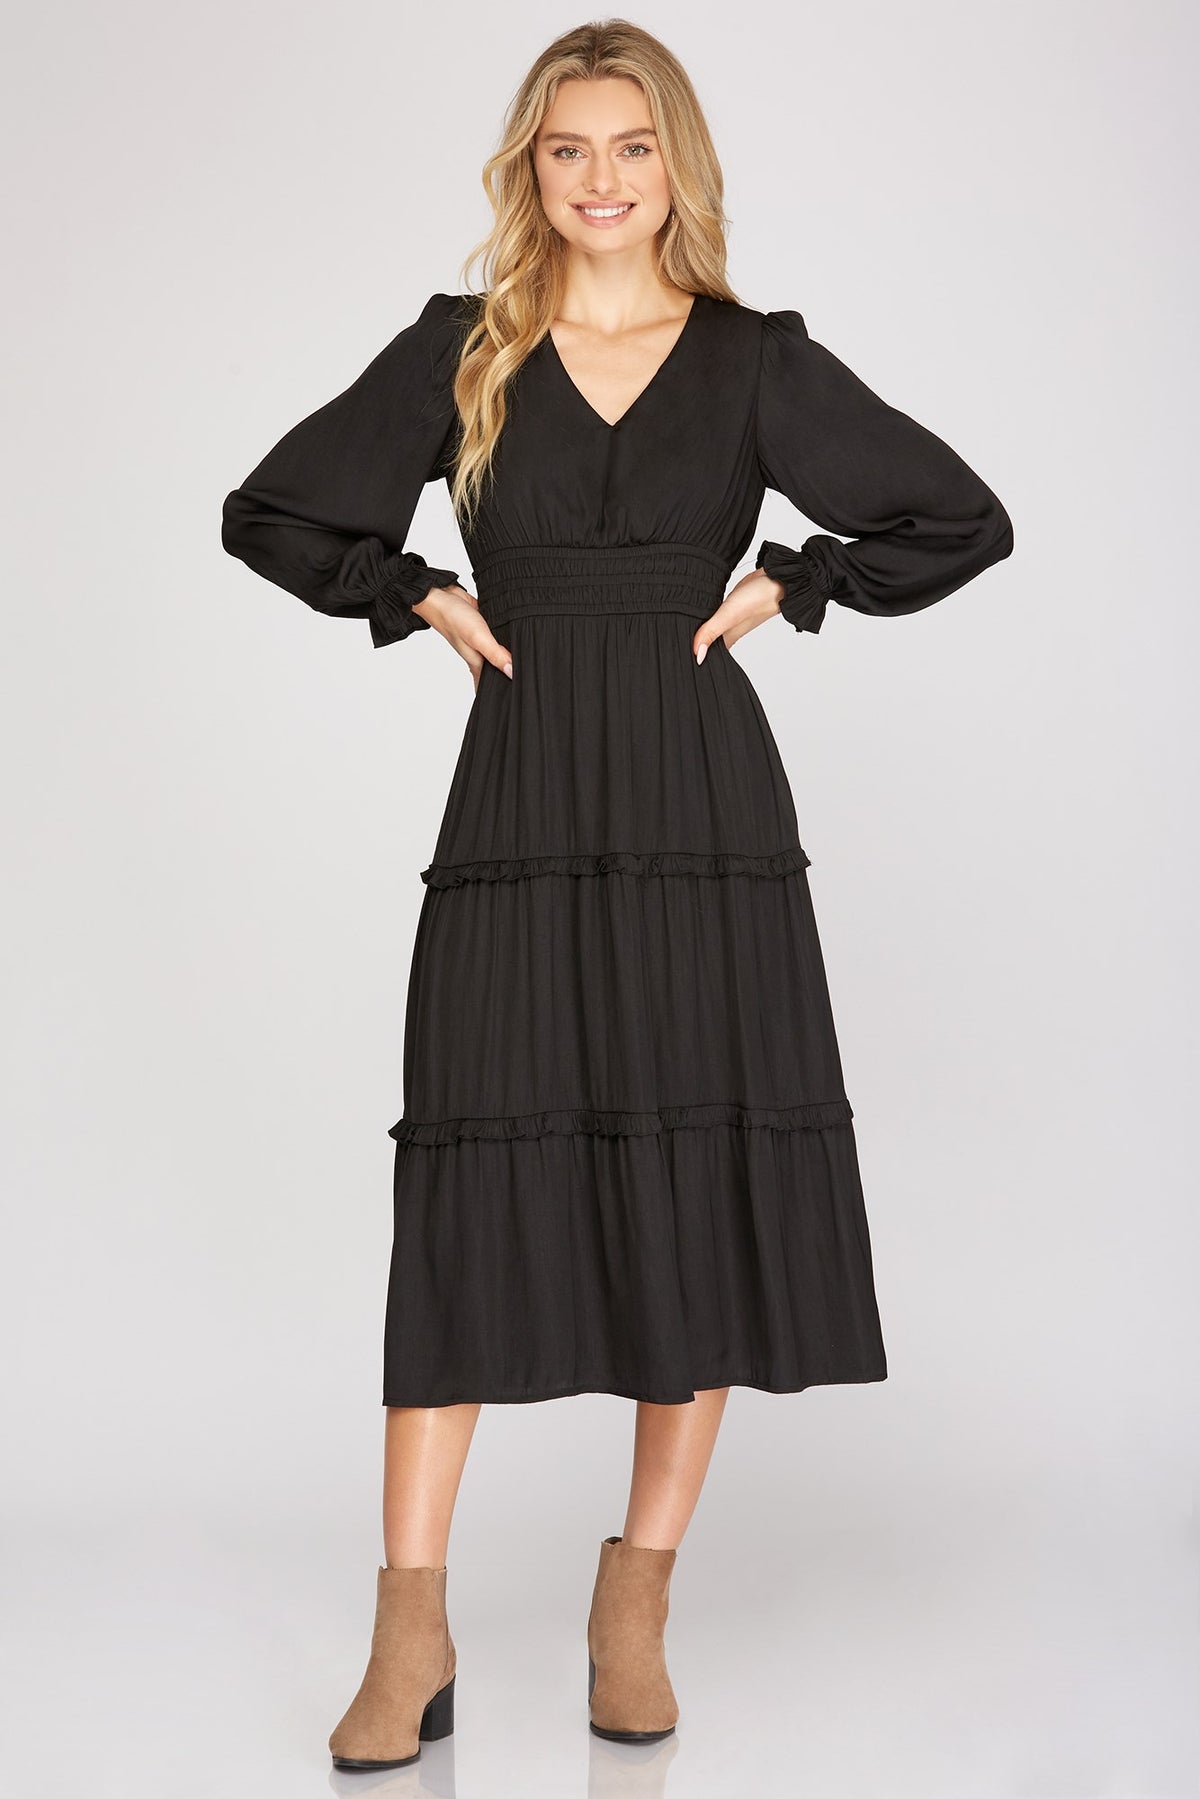 The Attic Boutique Taylor Black Ruffle Dress Dress - The Attic Boutique